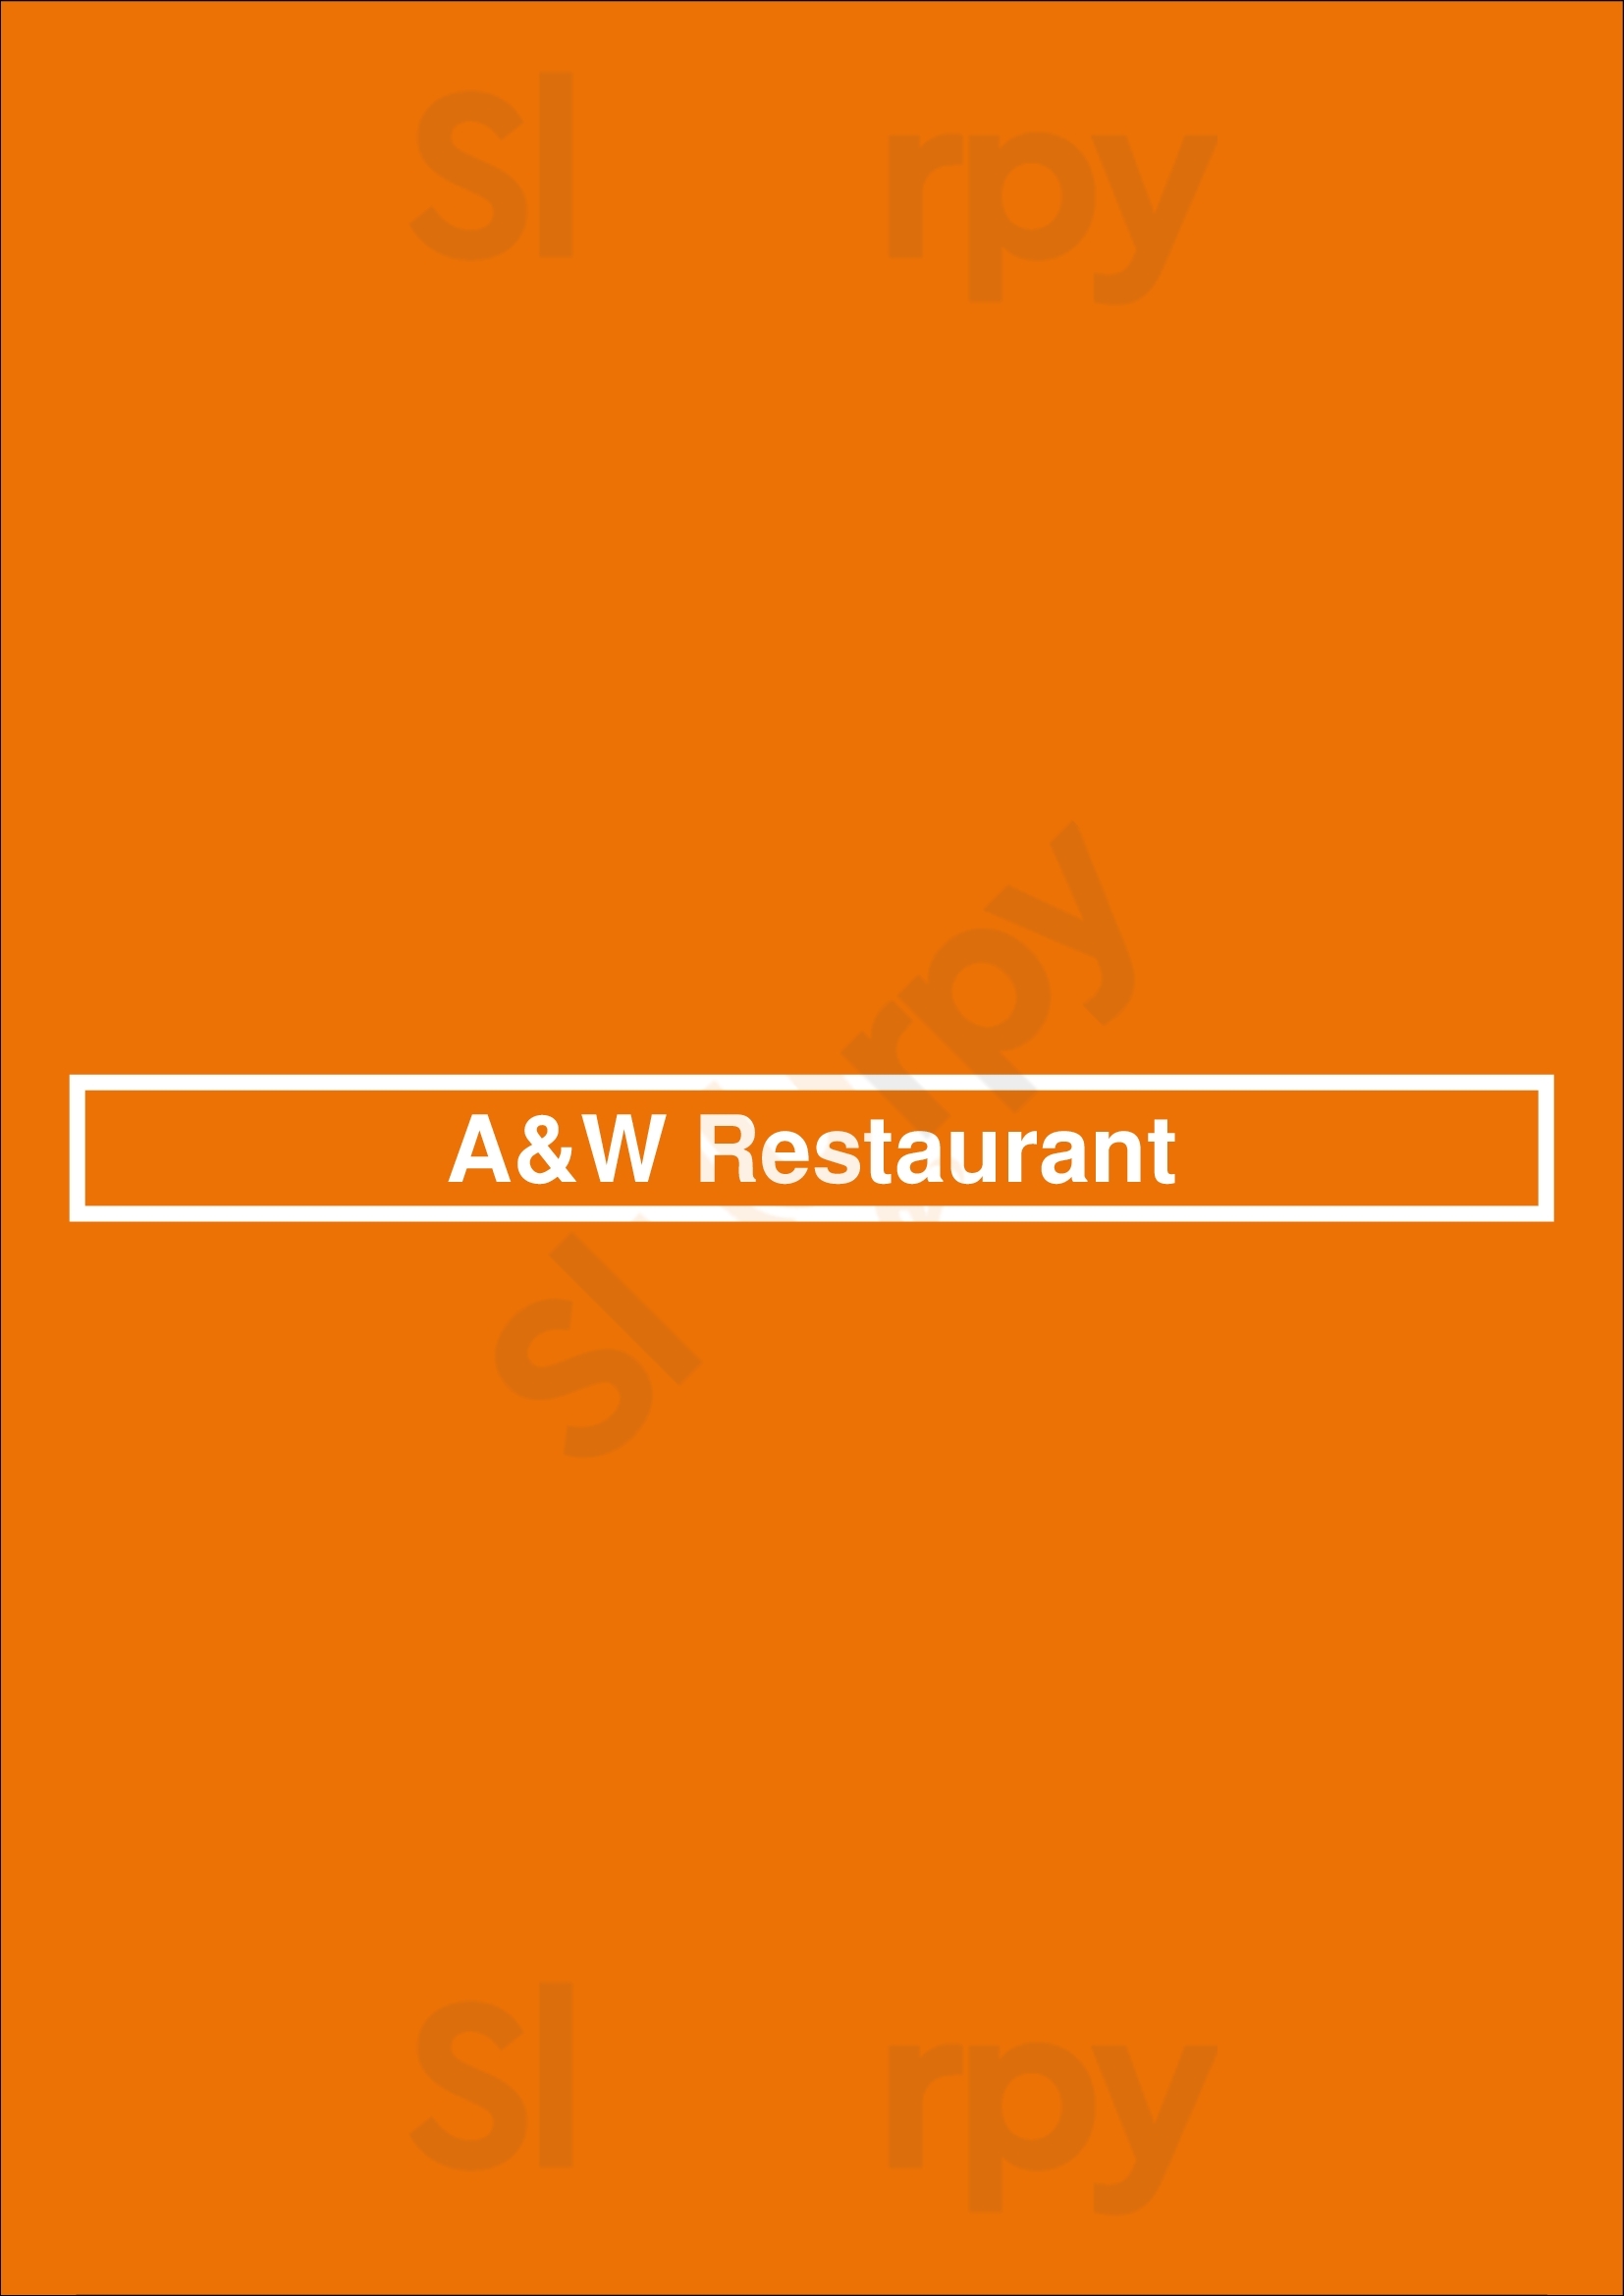 A&w Restaurant London Menu - 1